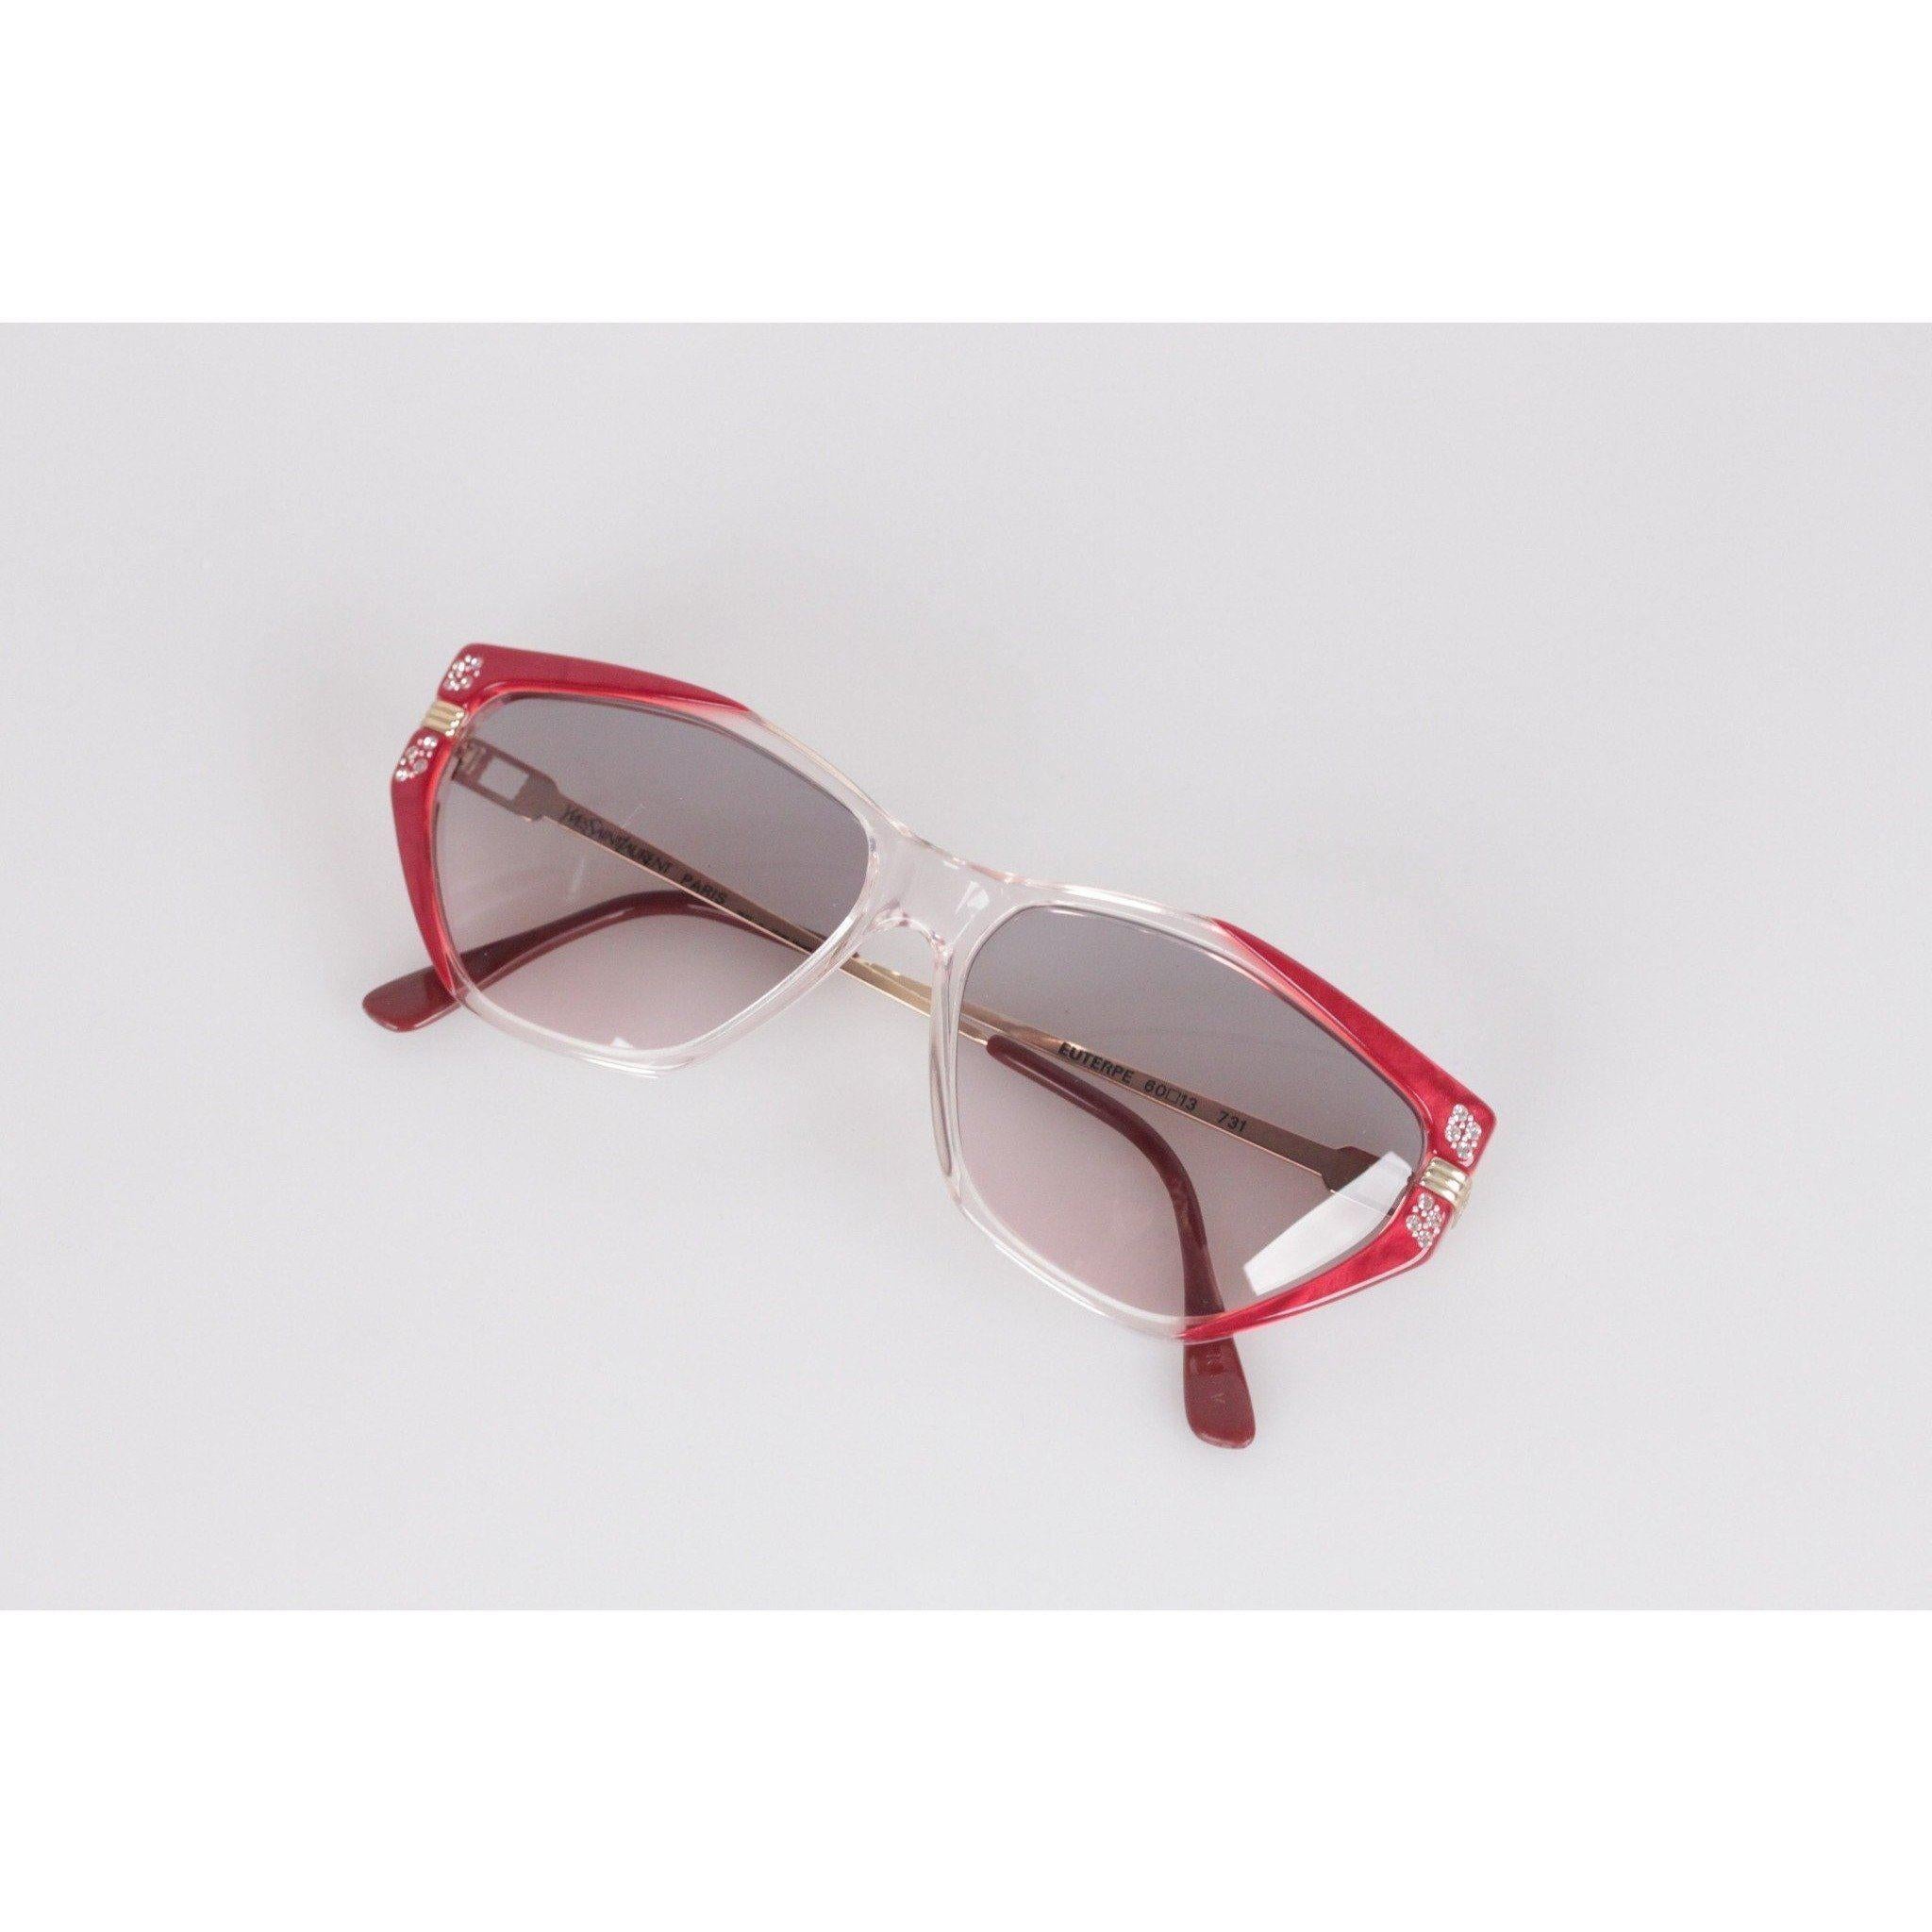 Yves Saint Laurent Vintage Red Sunglasses Euterpe 60mm 5